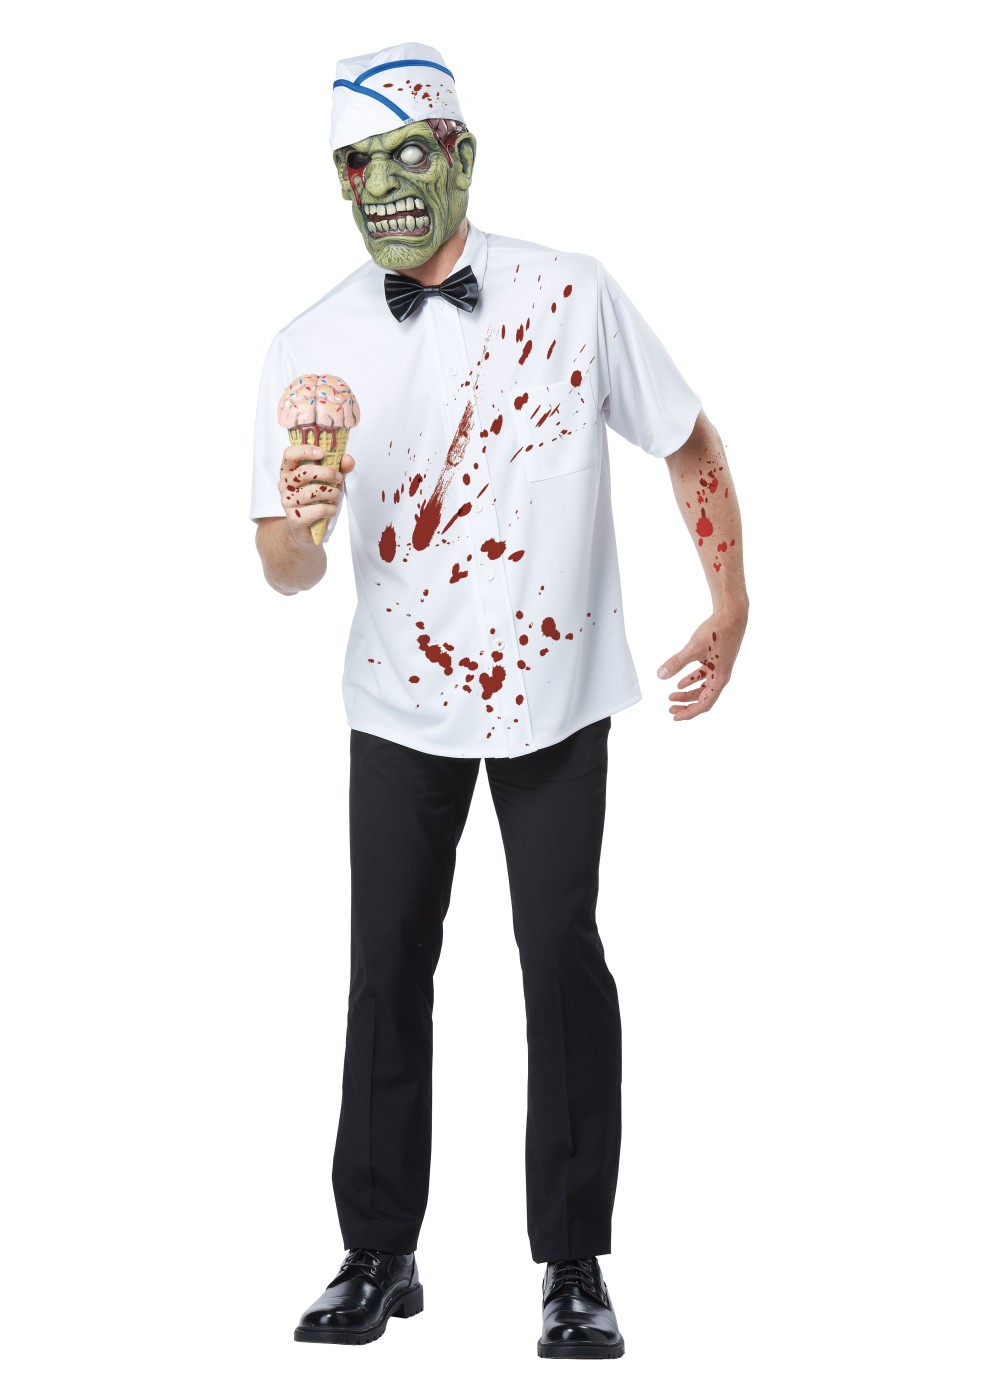 I Scream Man Costume - Scary Costumes